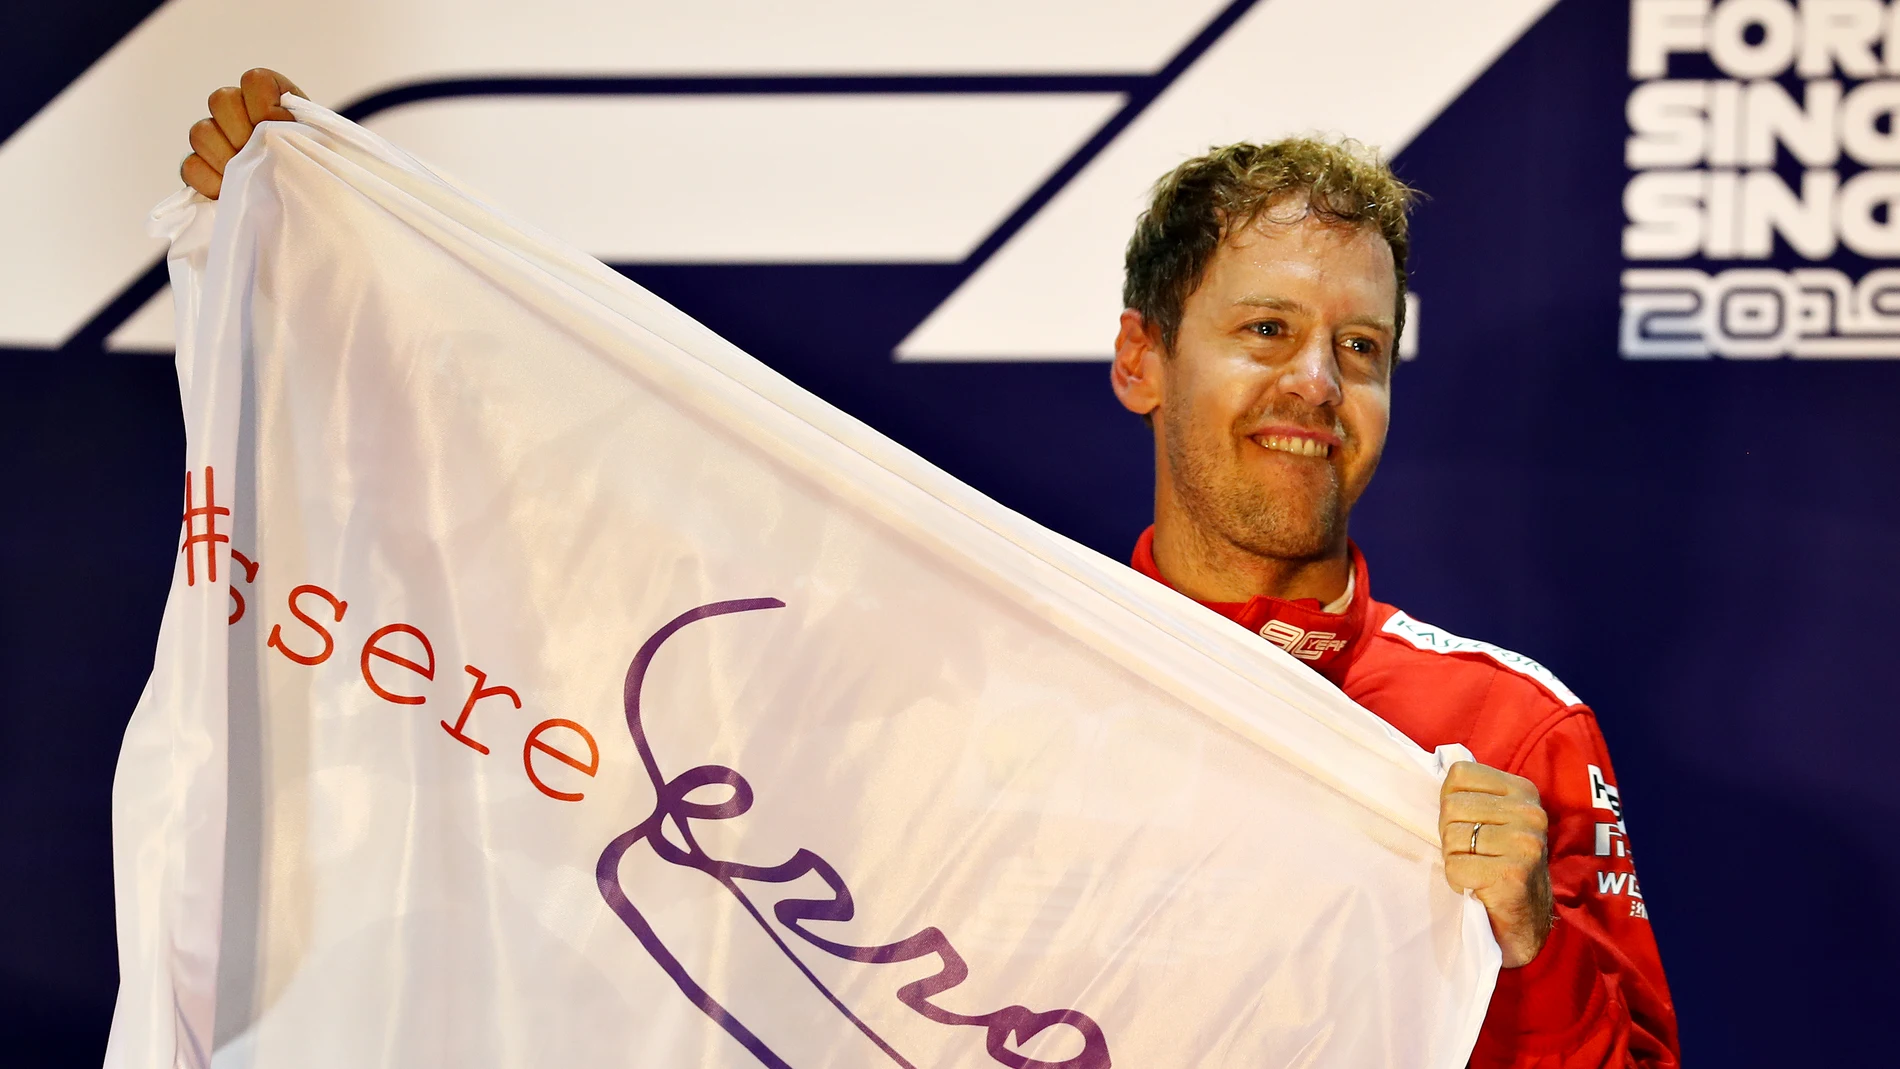 Vettel sostiene una bandera con el lema 'Essere Ferrari' ('Ser Ferrari')